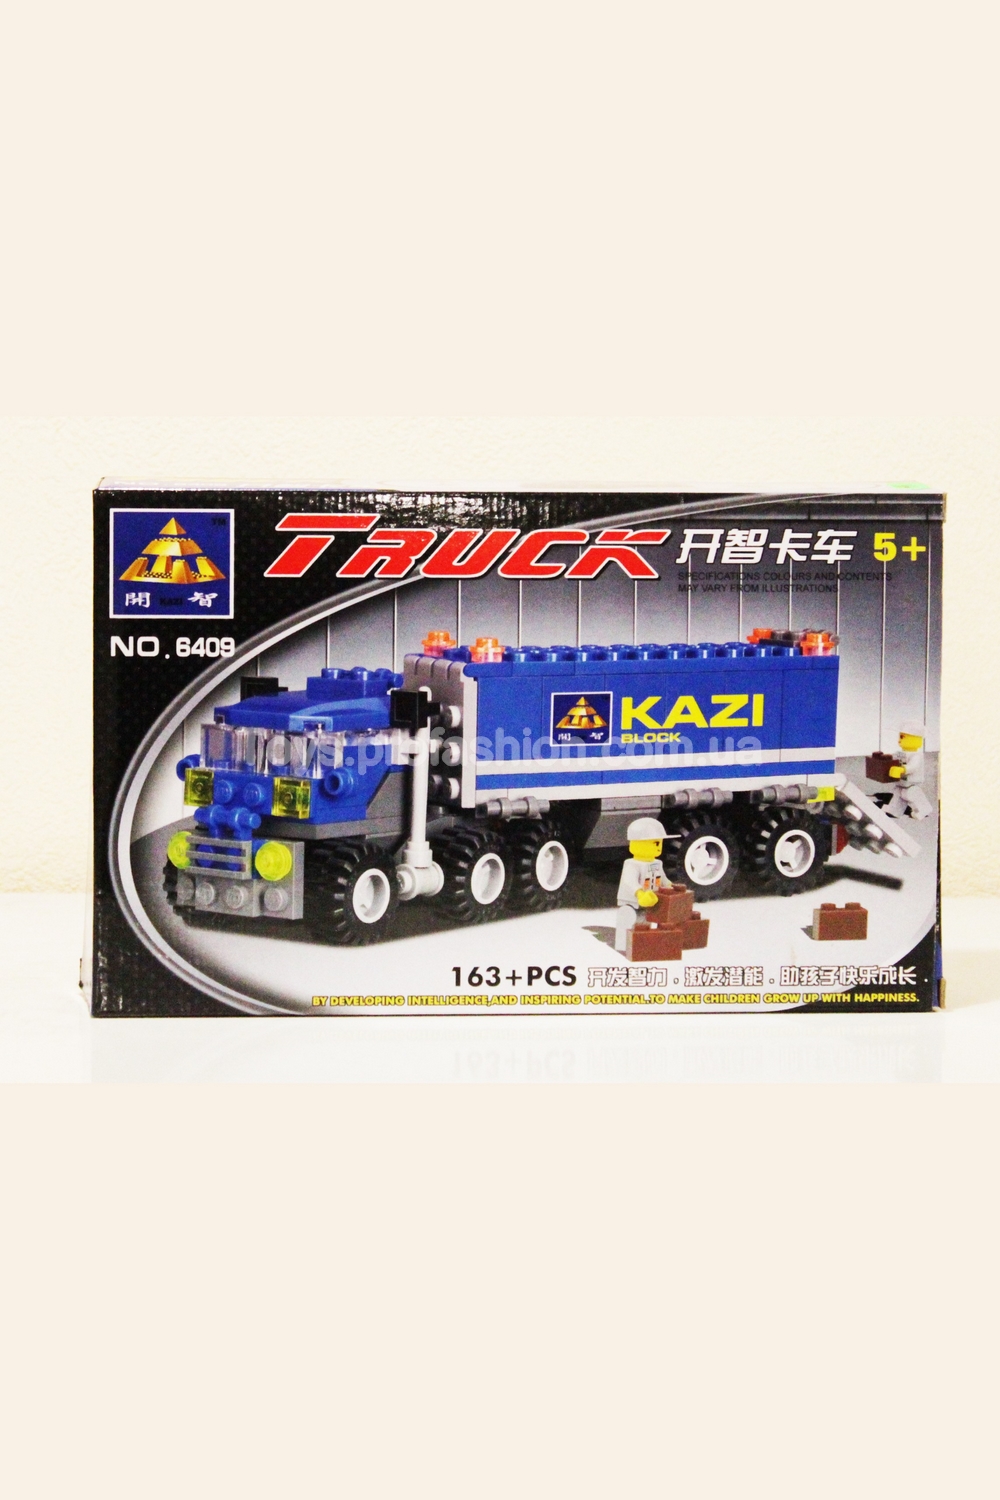 Конструктор-грузовик из 163 элемента (KAZI) 6409,4611